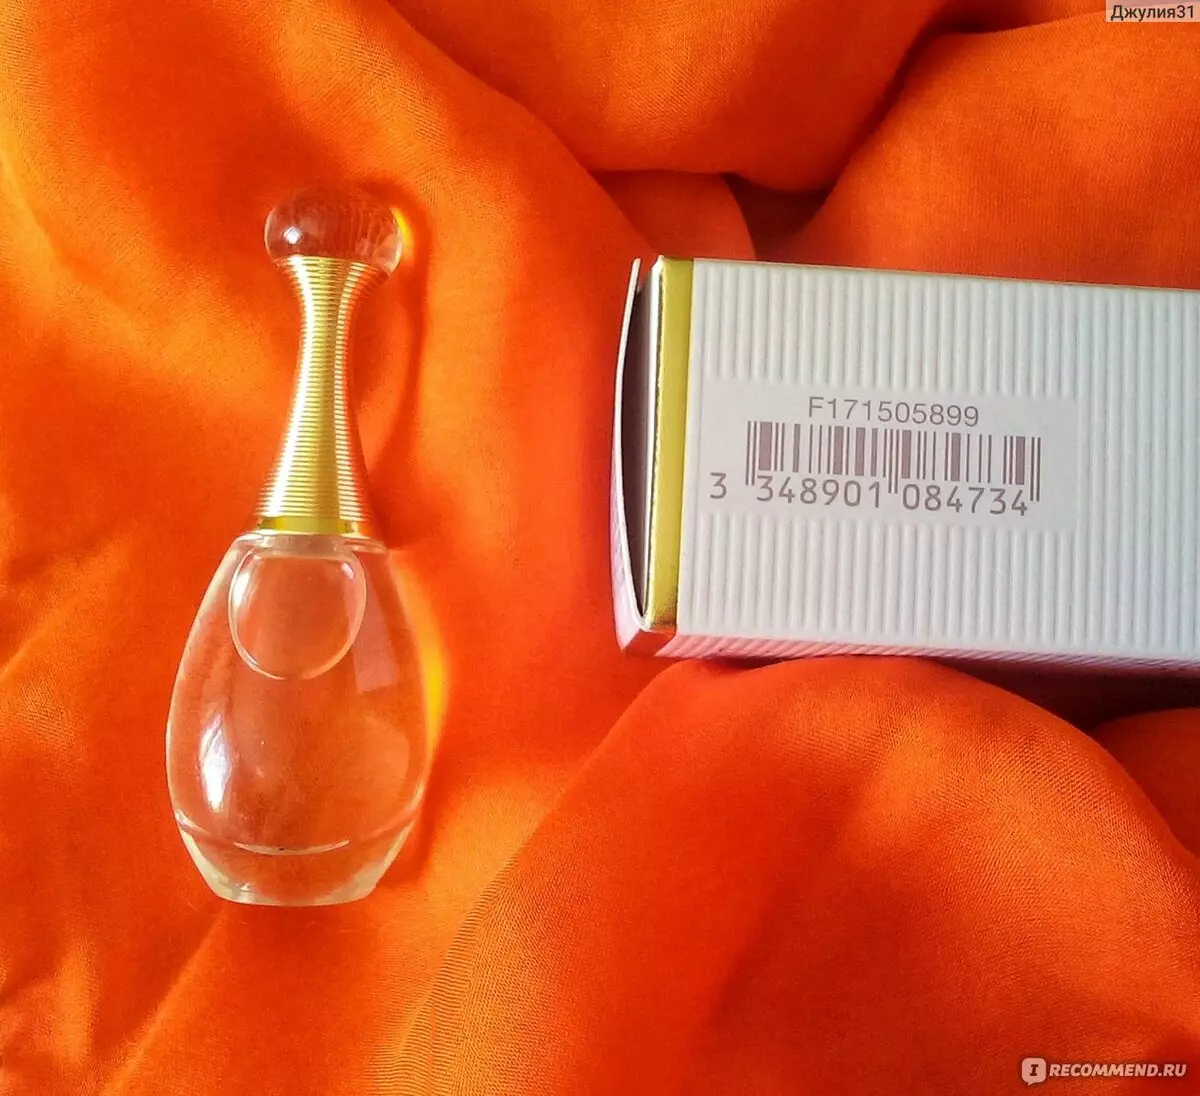 Perfumería Dior (56 fotos): Perfume feminino, Miss Dior e J'Adore Absolu Auga Absolu, Sauvage de homes, Diorissimo e Bouquet Blooming, Outros perfumes franceses 25161_54